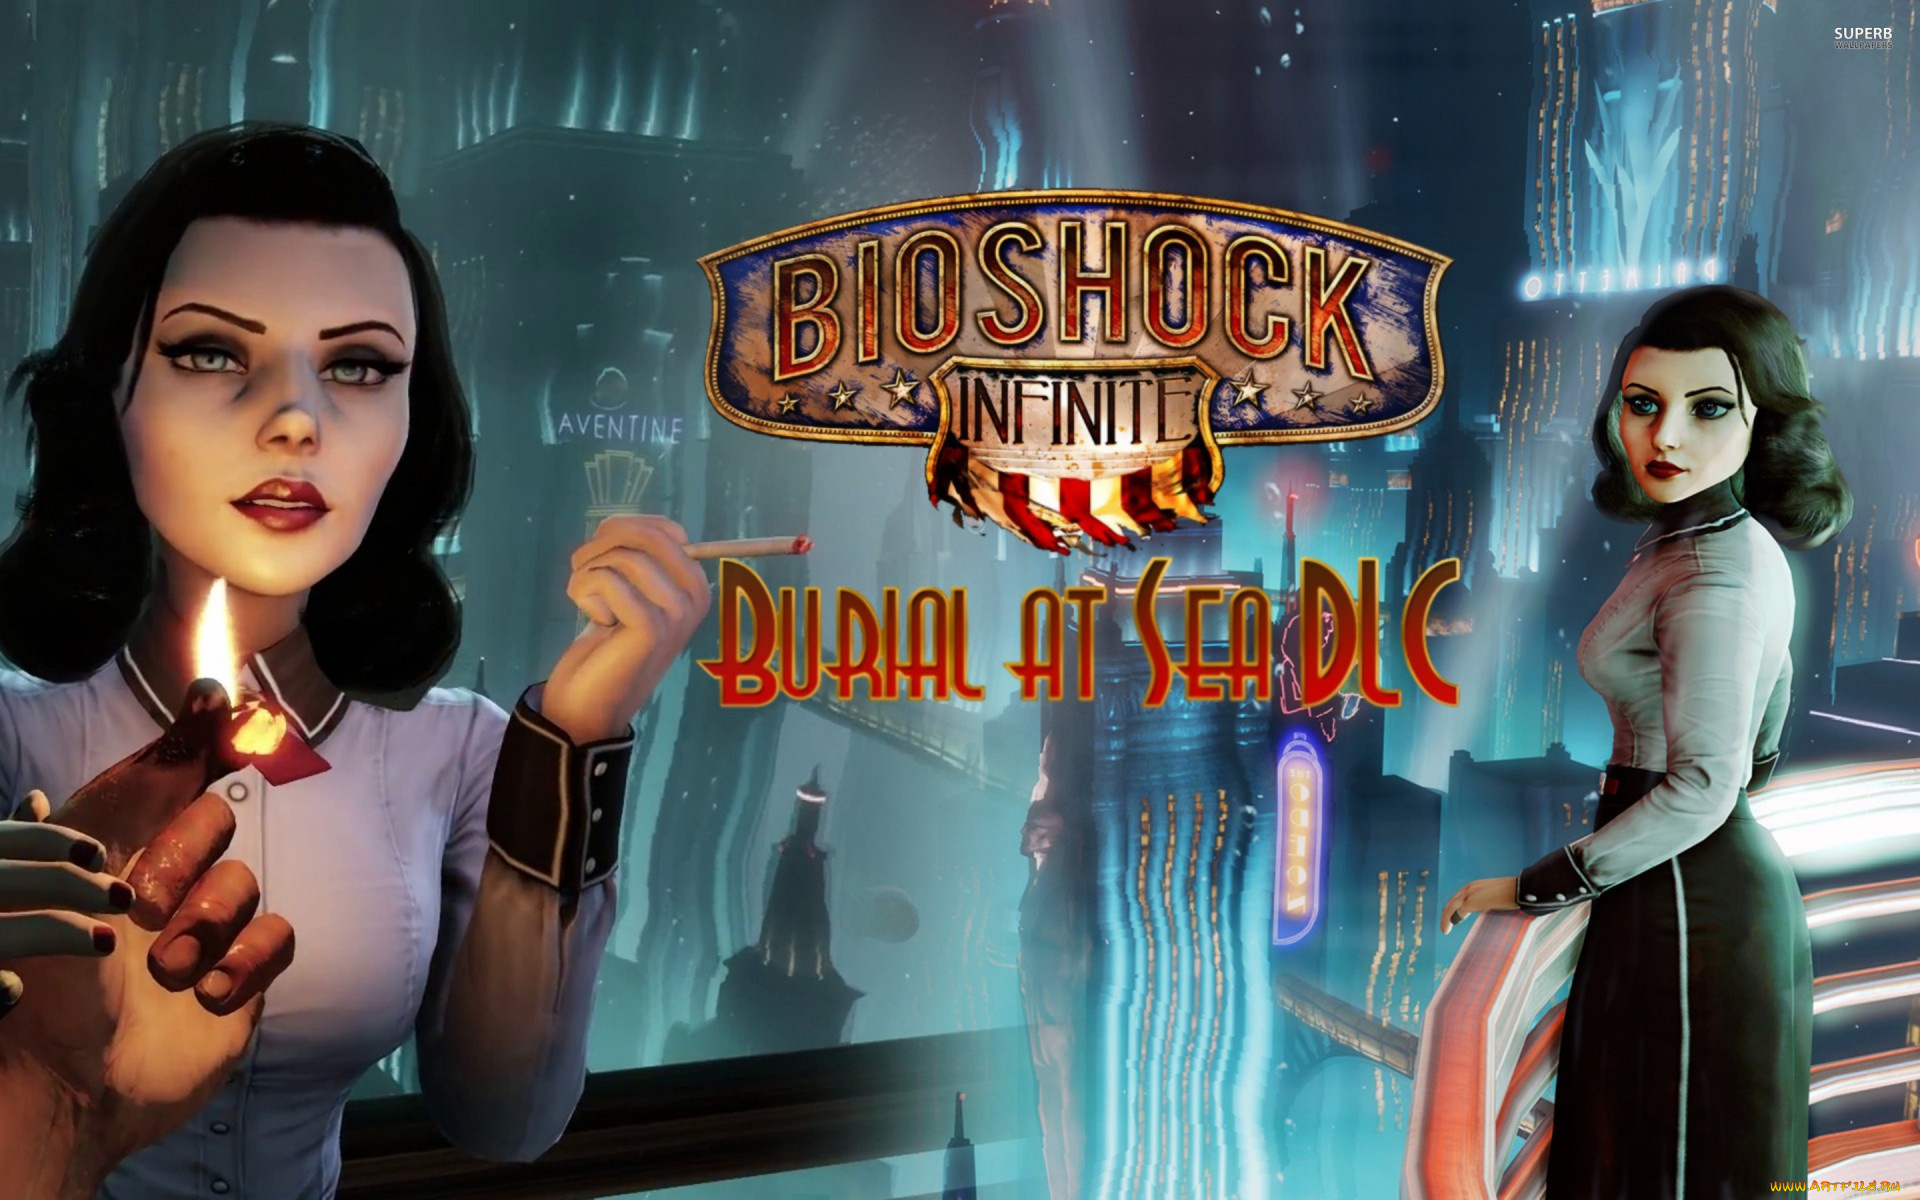 Биошок инфинити длс. Bioshock Infinite Элизабет. Элизабет Bioshock Infinite DLC. Bioshock Infinite 2010. Элизабет биошок Burial at Sea.